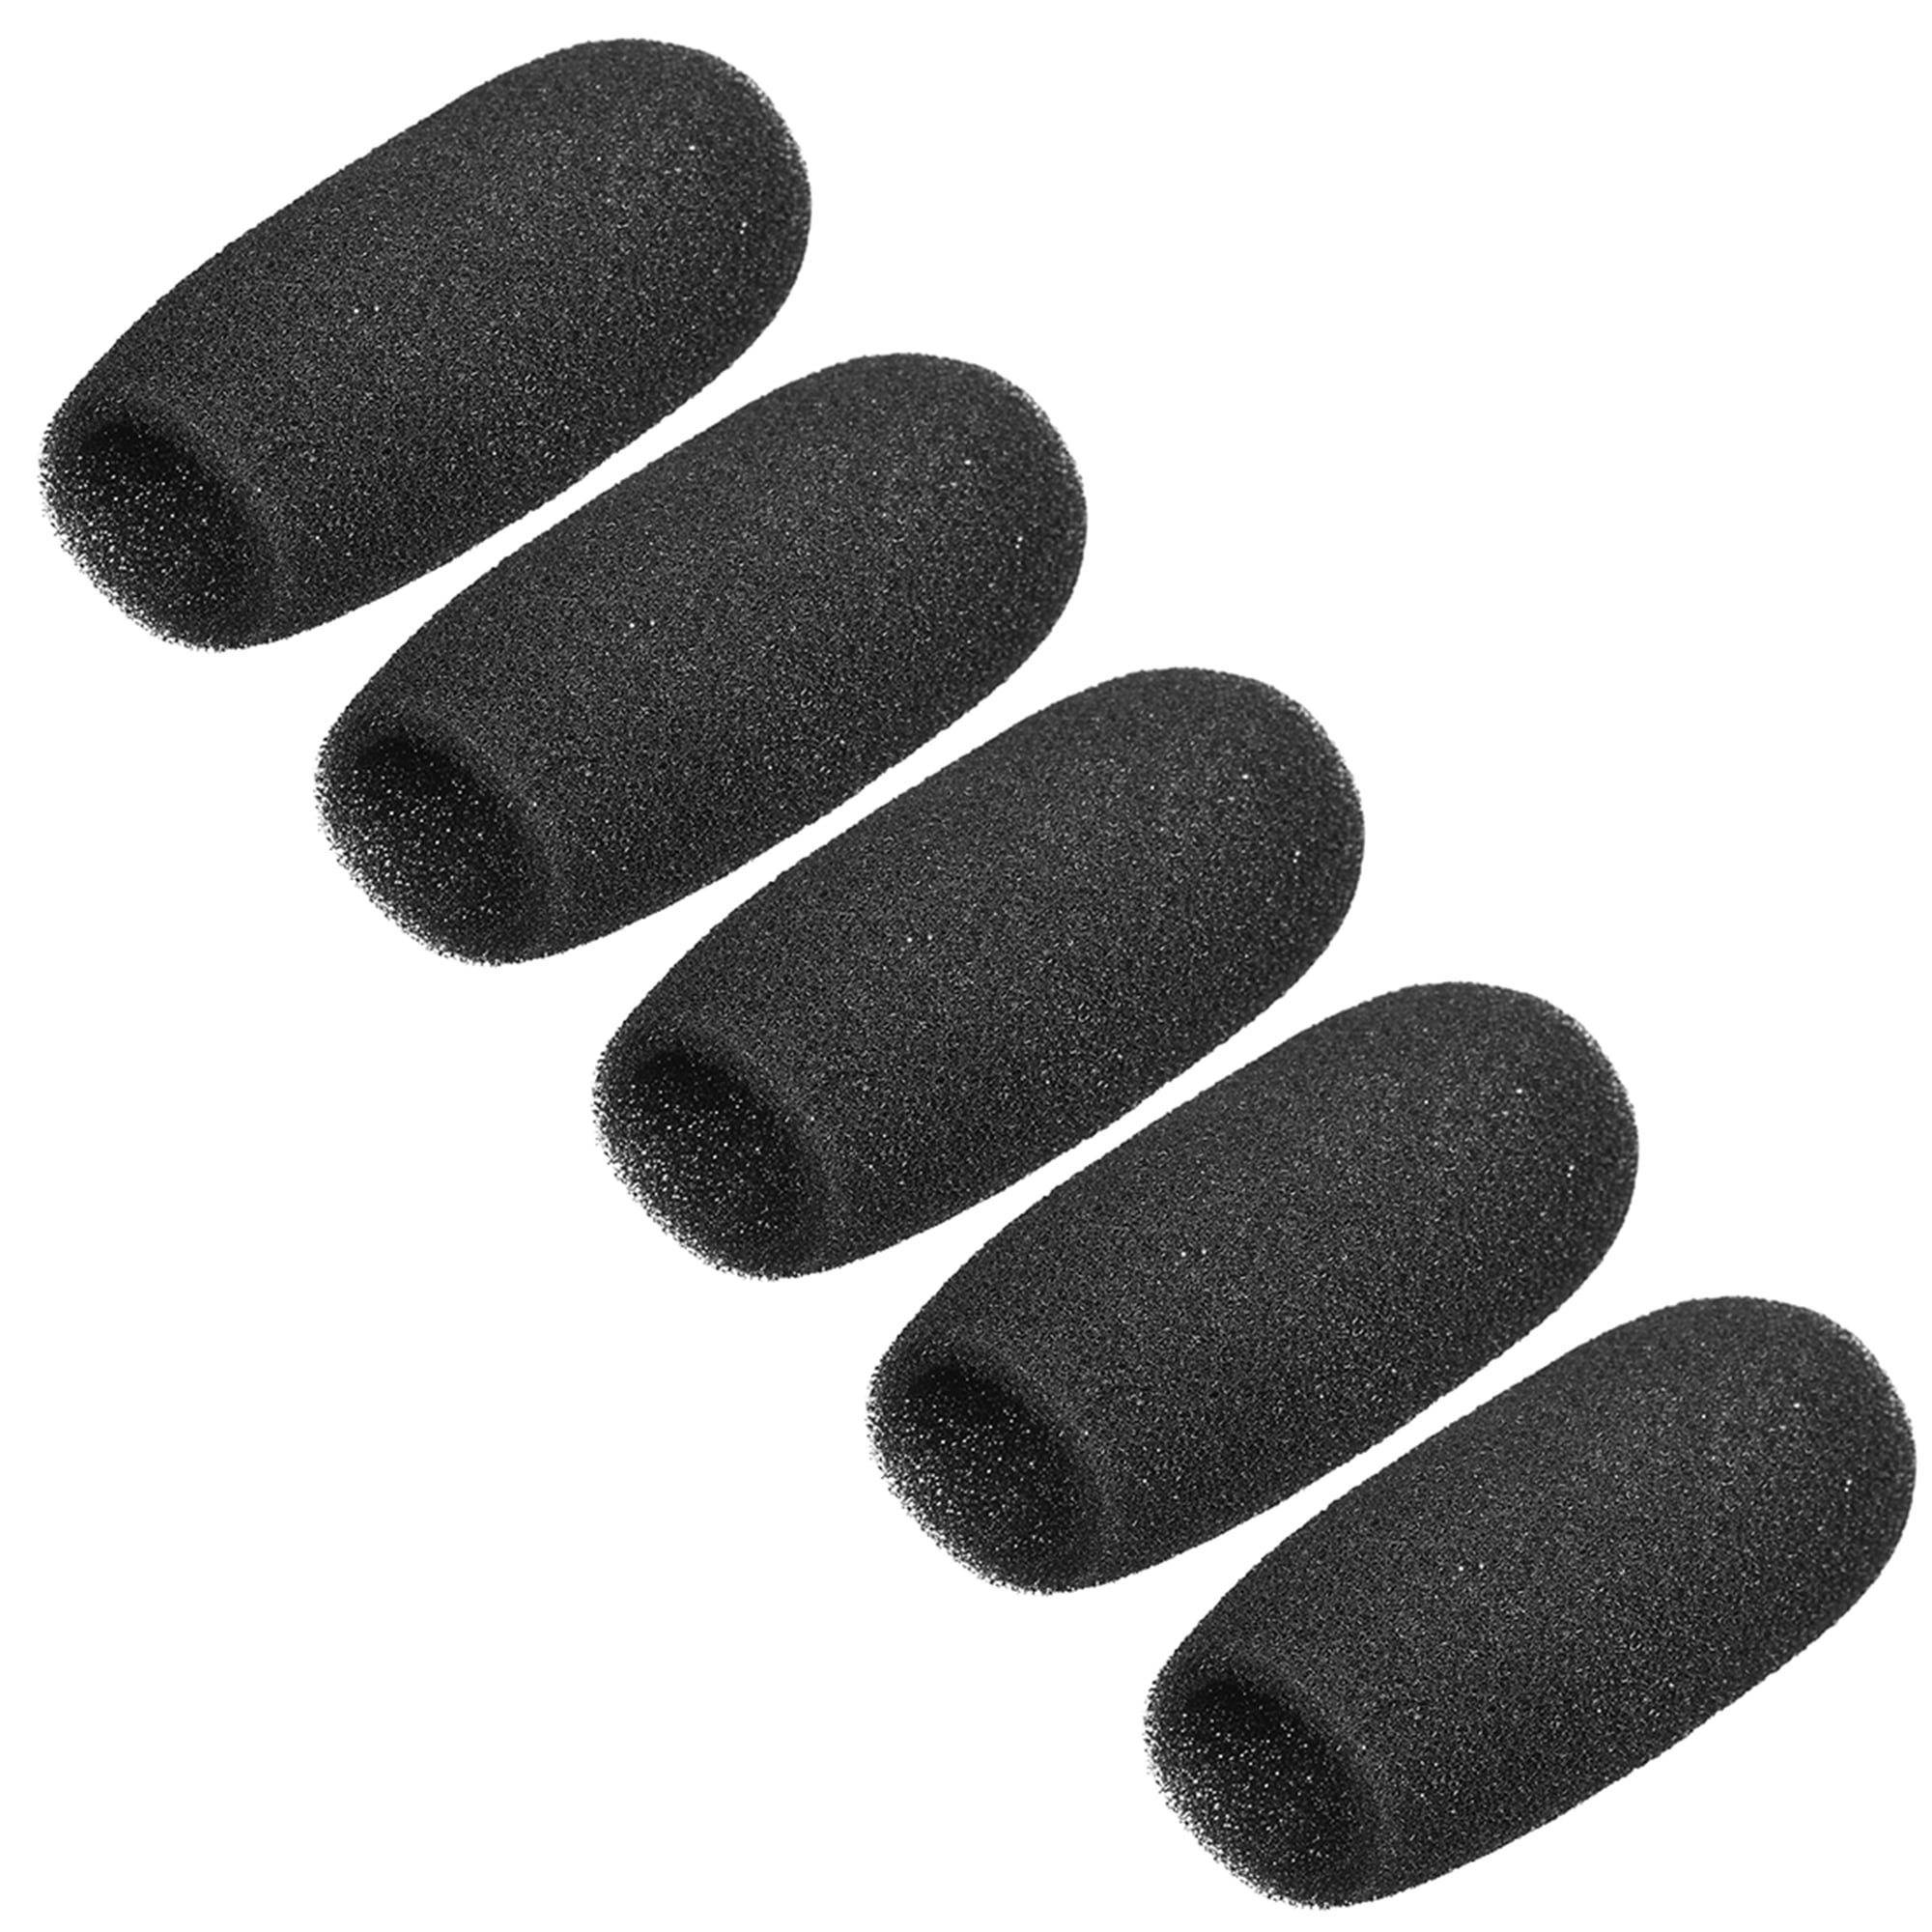 20 PCS Sponge Foam Mic Cover Conference Microphone Windscreen Shield Protection Black 72mm Long